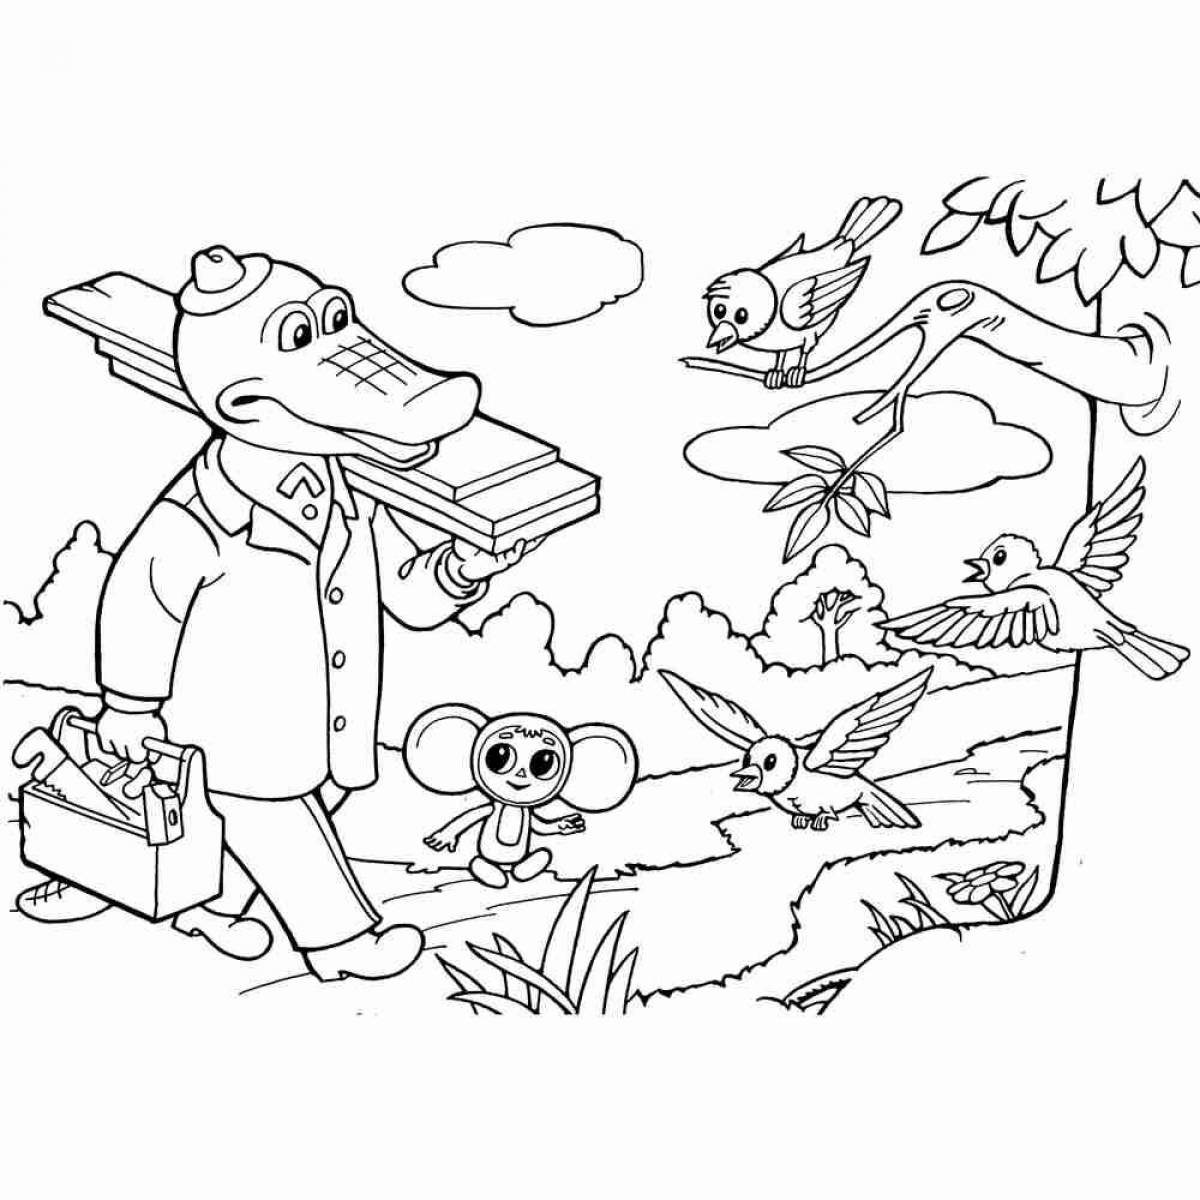 Coloring page playful cheburashka and crocodile gene